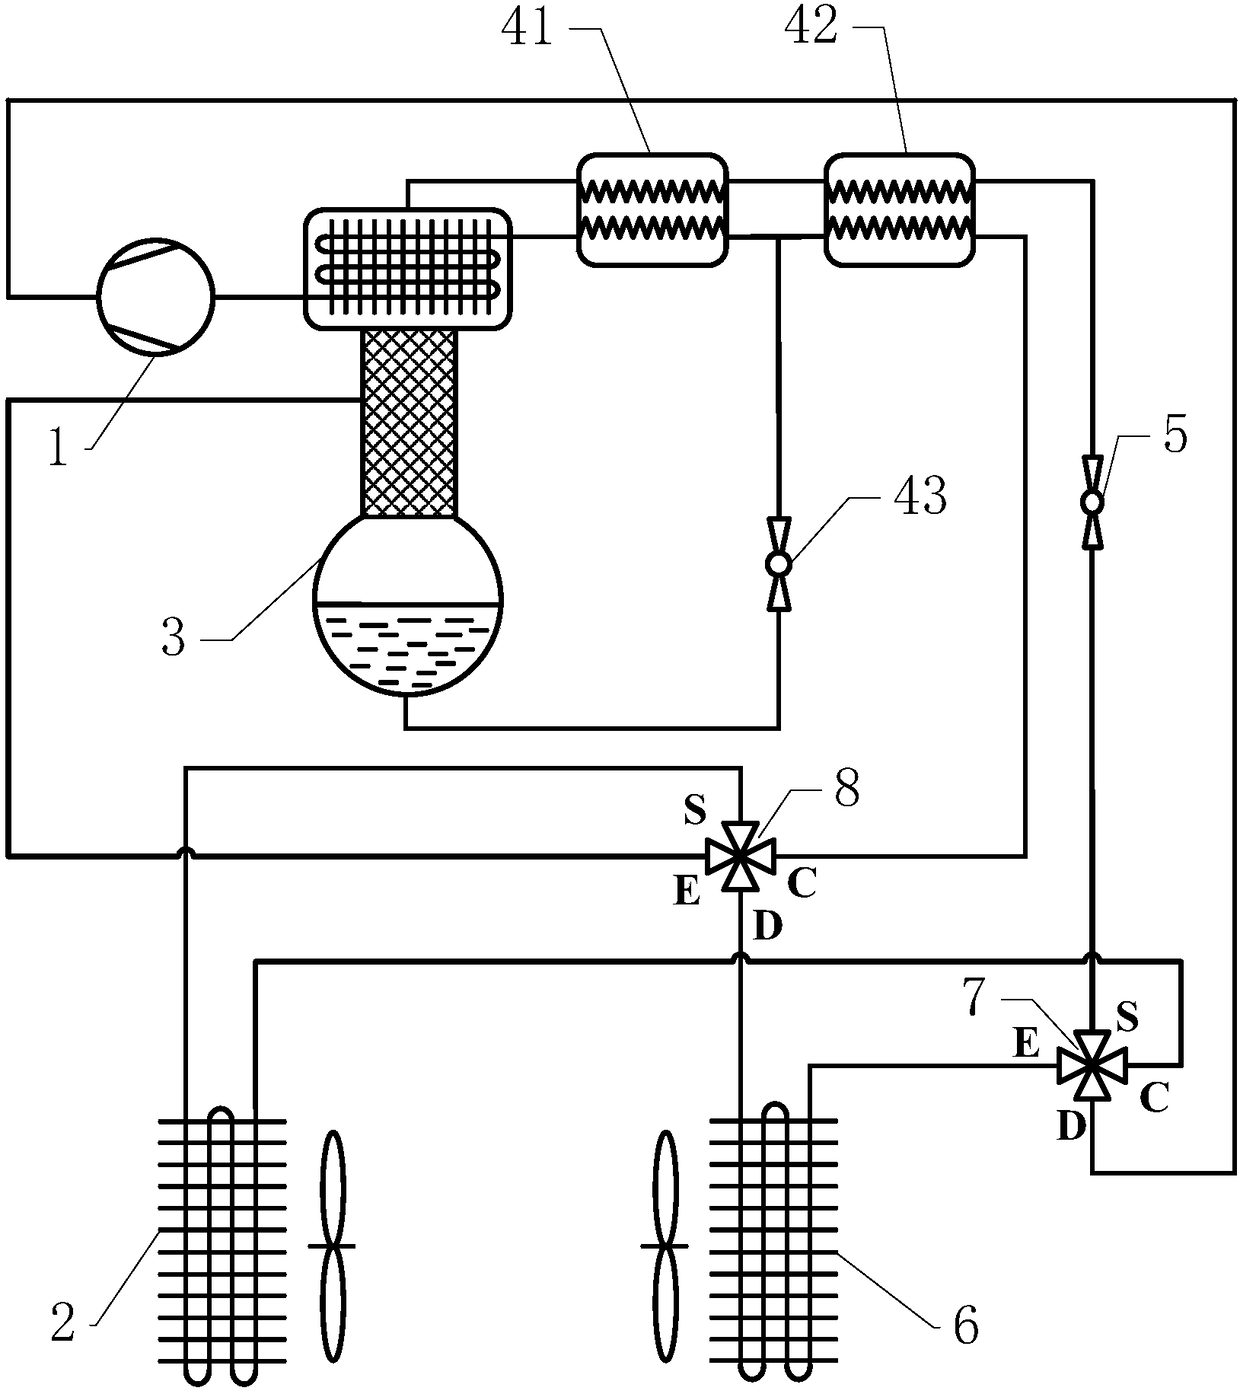 Bidirectional auto-cascade heat pump system